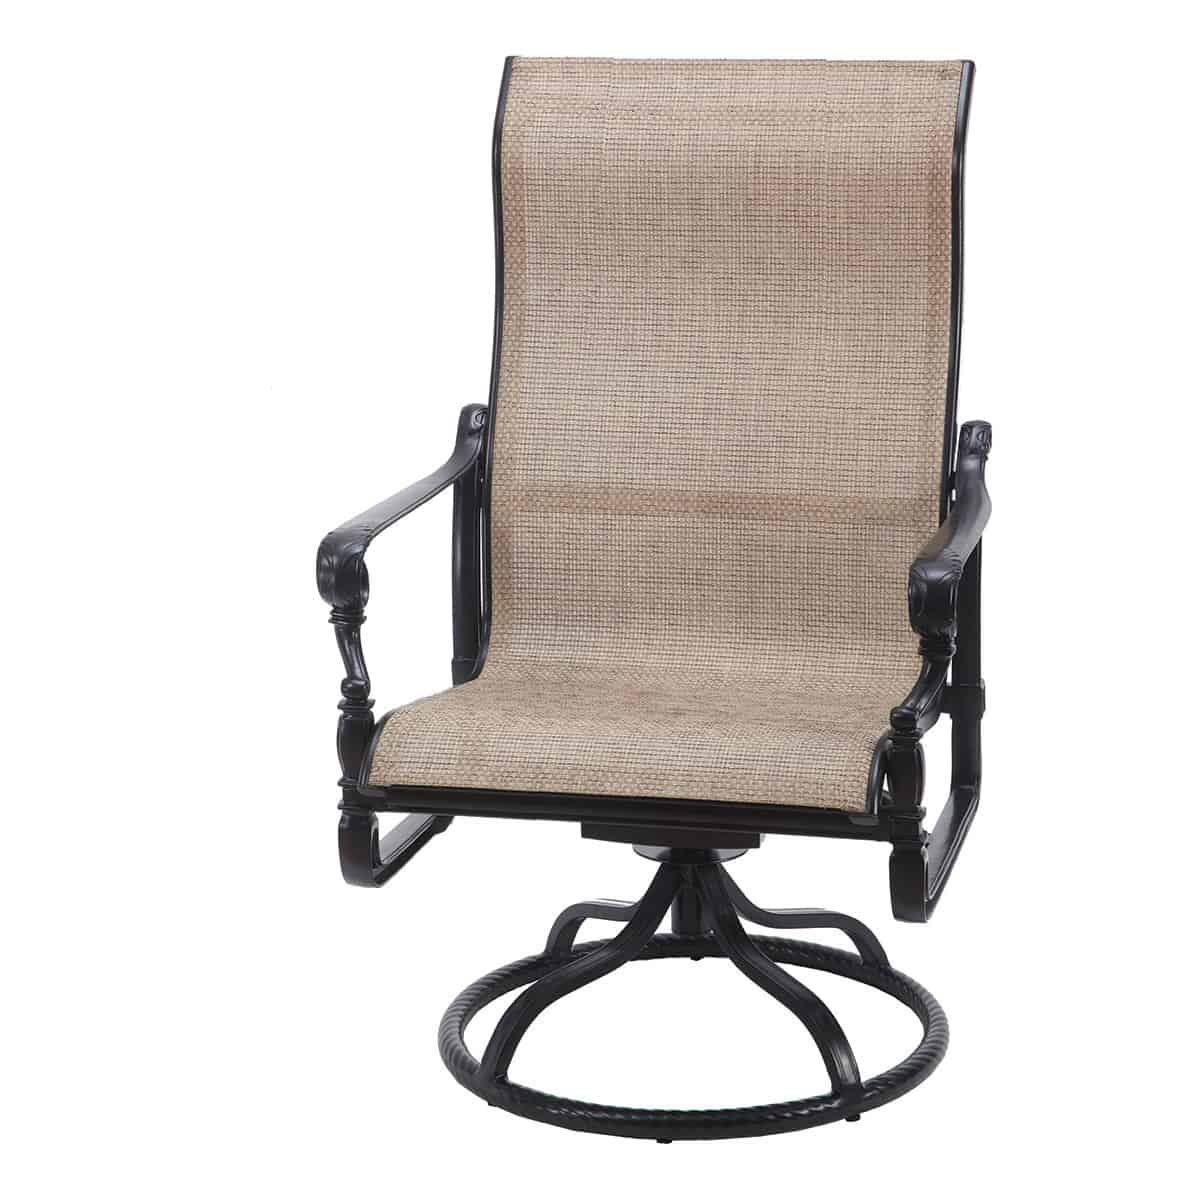 Grand Terrace Sling High Back Swivel Rocker Lounge Chair For Sling High Back Swivel Chairs (View 17 of 25)